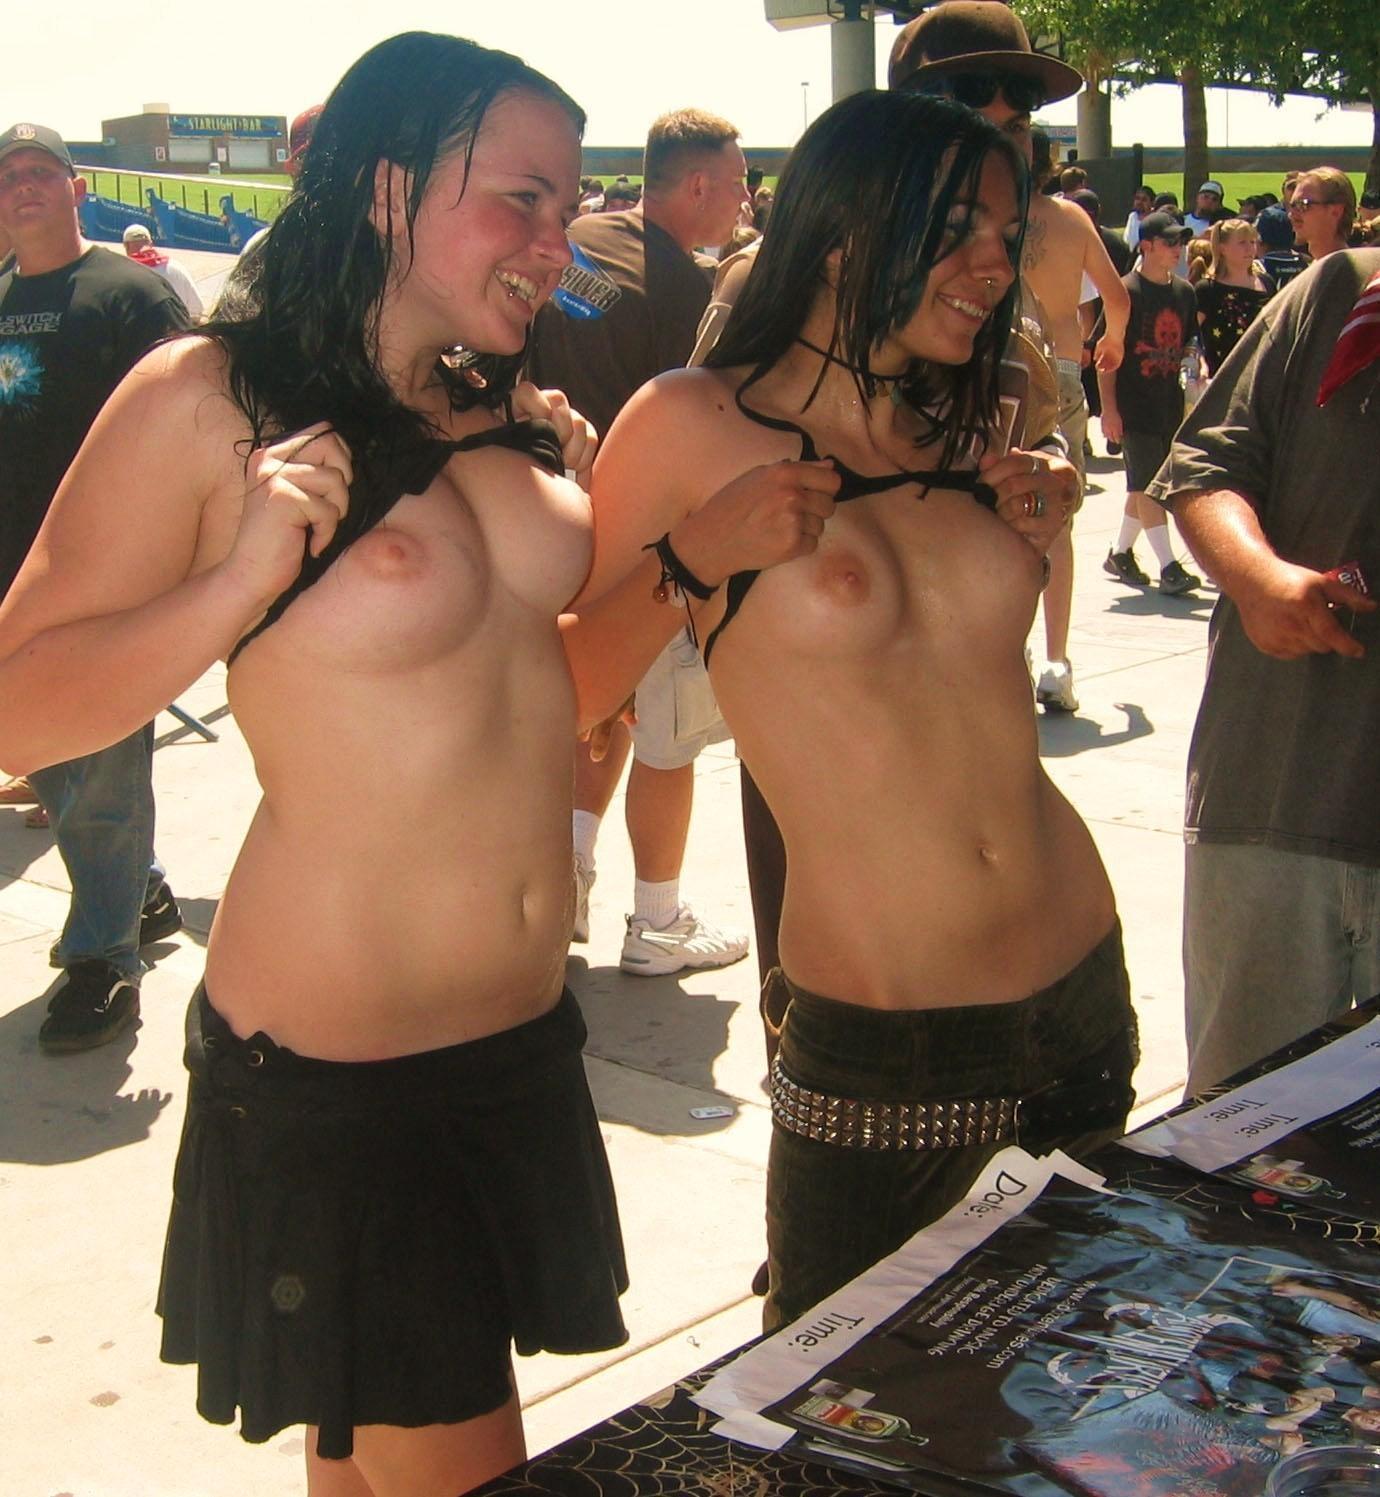 Ozzfest girls flashing for free stuff Porn